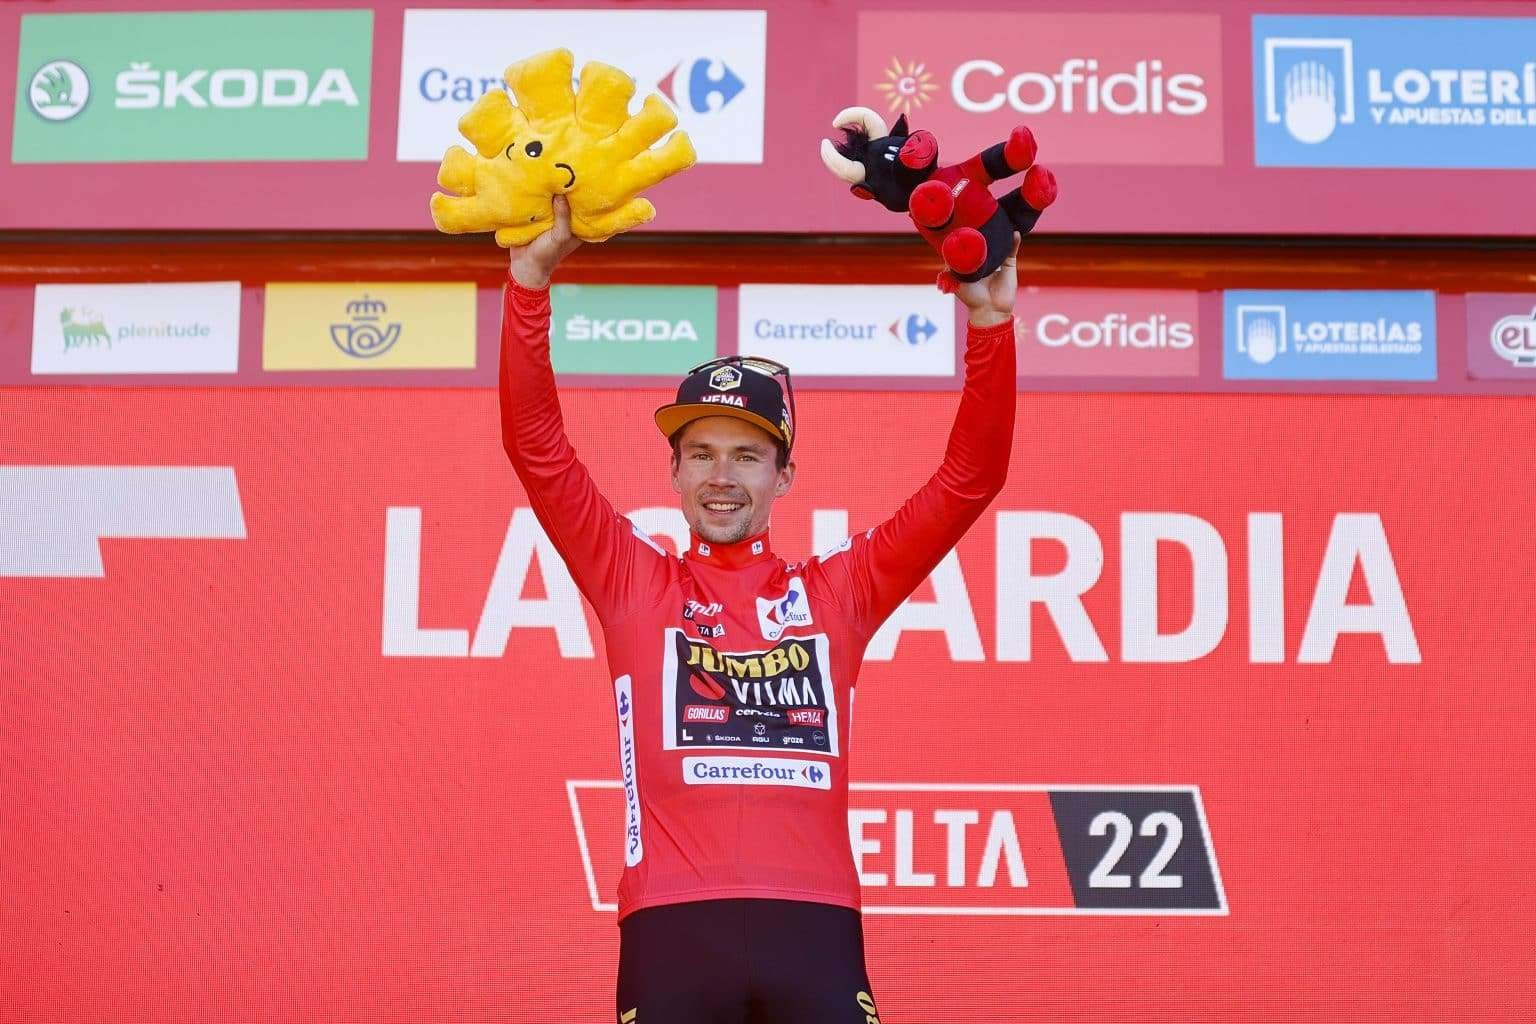 Pembalap Jumbo-Visma, Primoz Roglic, berhasil mejuarai etape 4 Vuelta a Espana sekaligus mengenakan jersey merah sebagai penanda pemuncak klasemen general classification. (Foto: Istimewa)